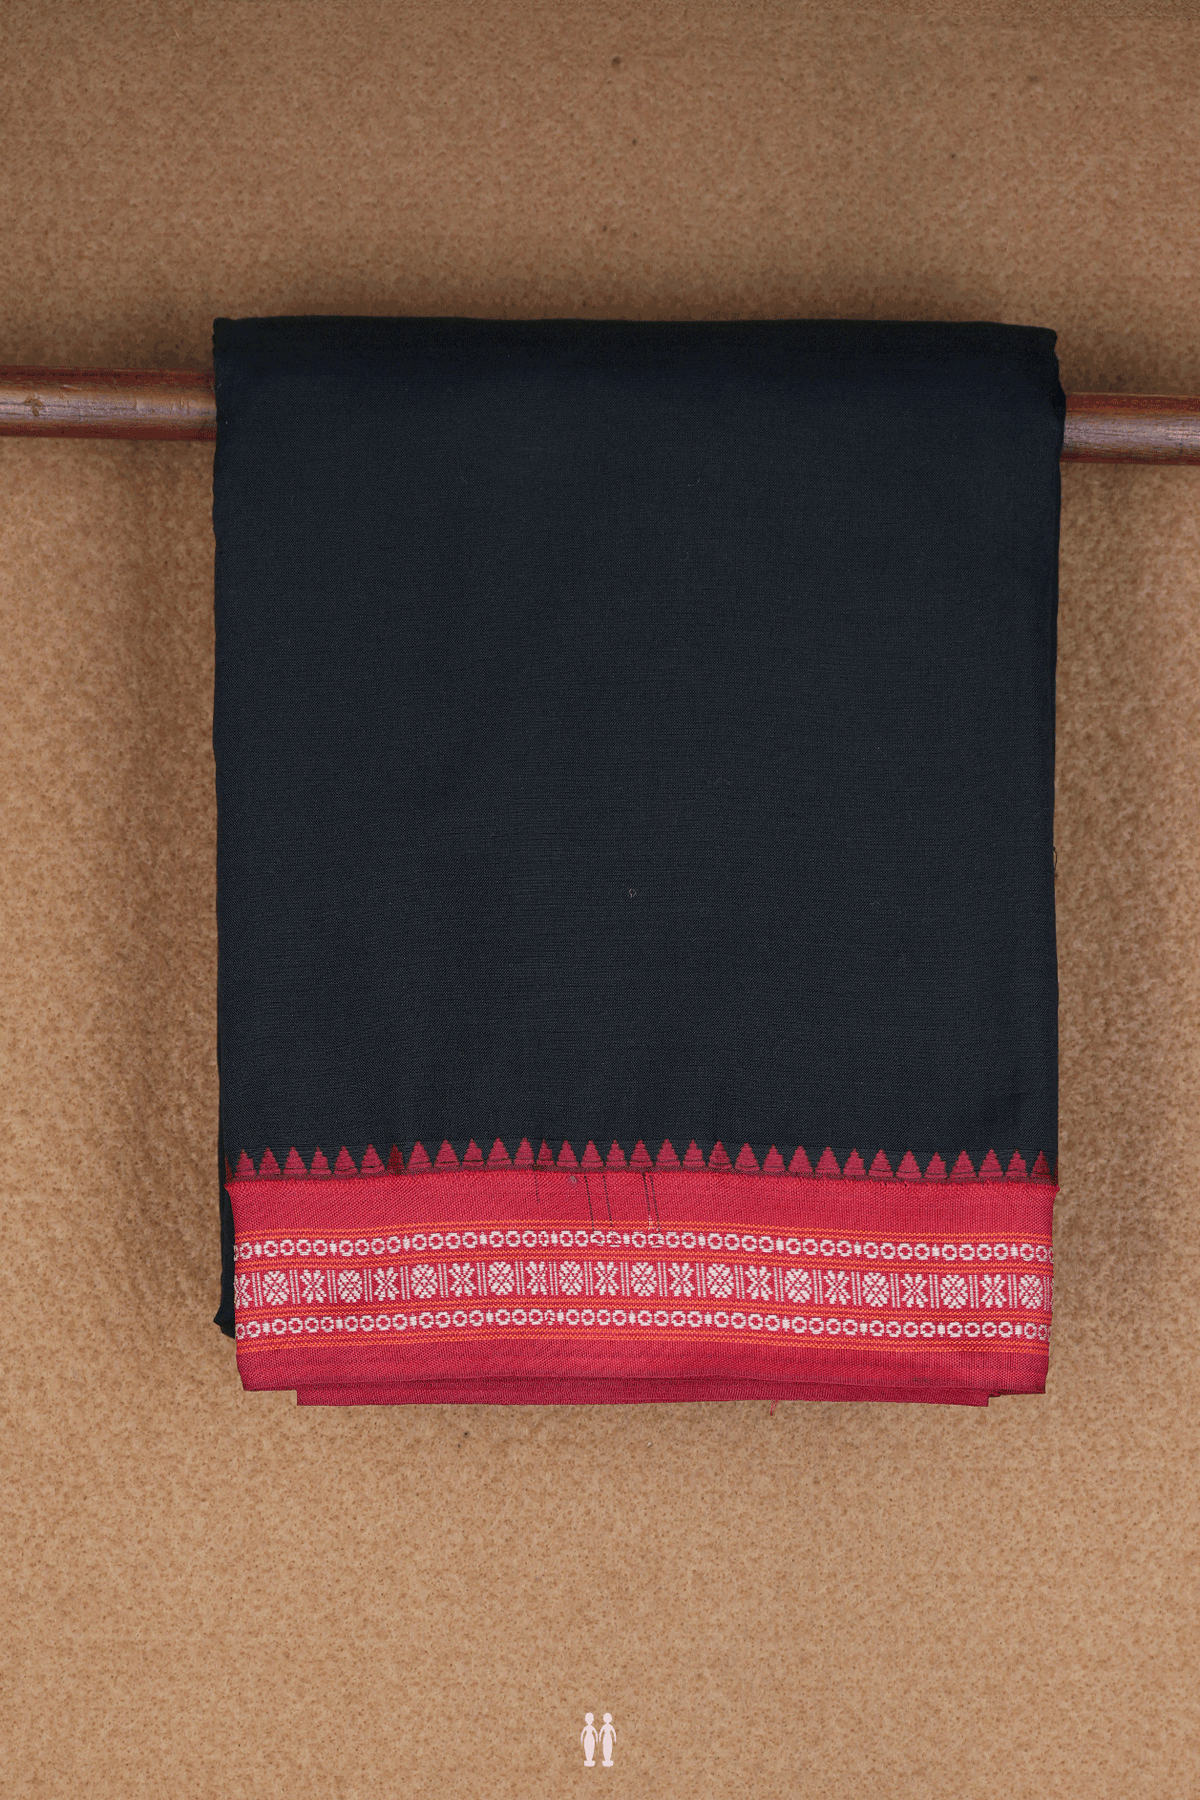 Threadwork Border Plain Black Dharwad Cotton Saree